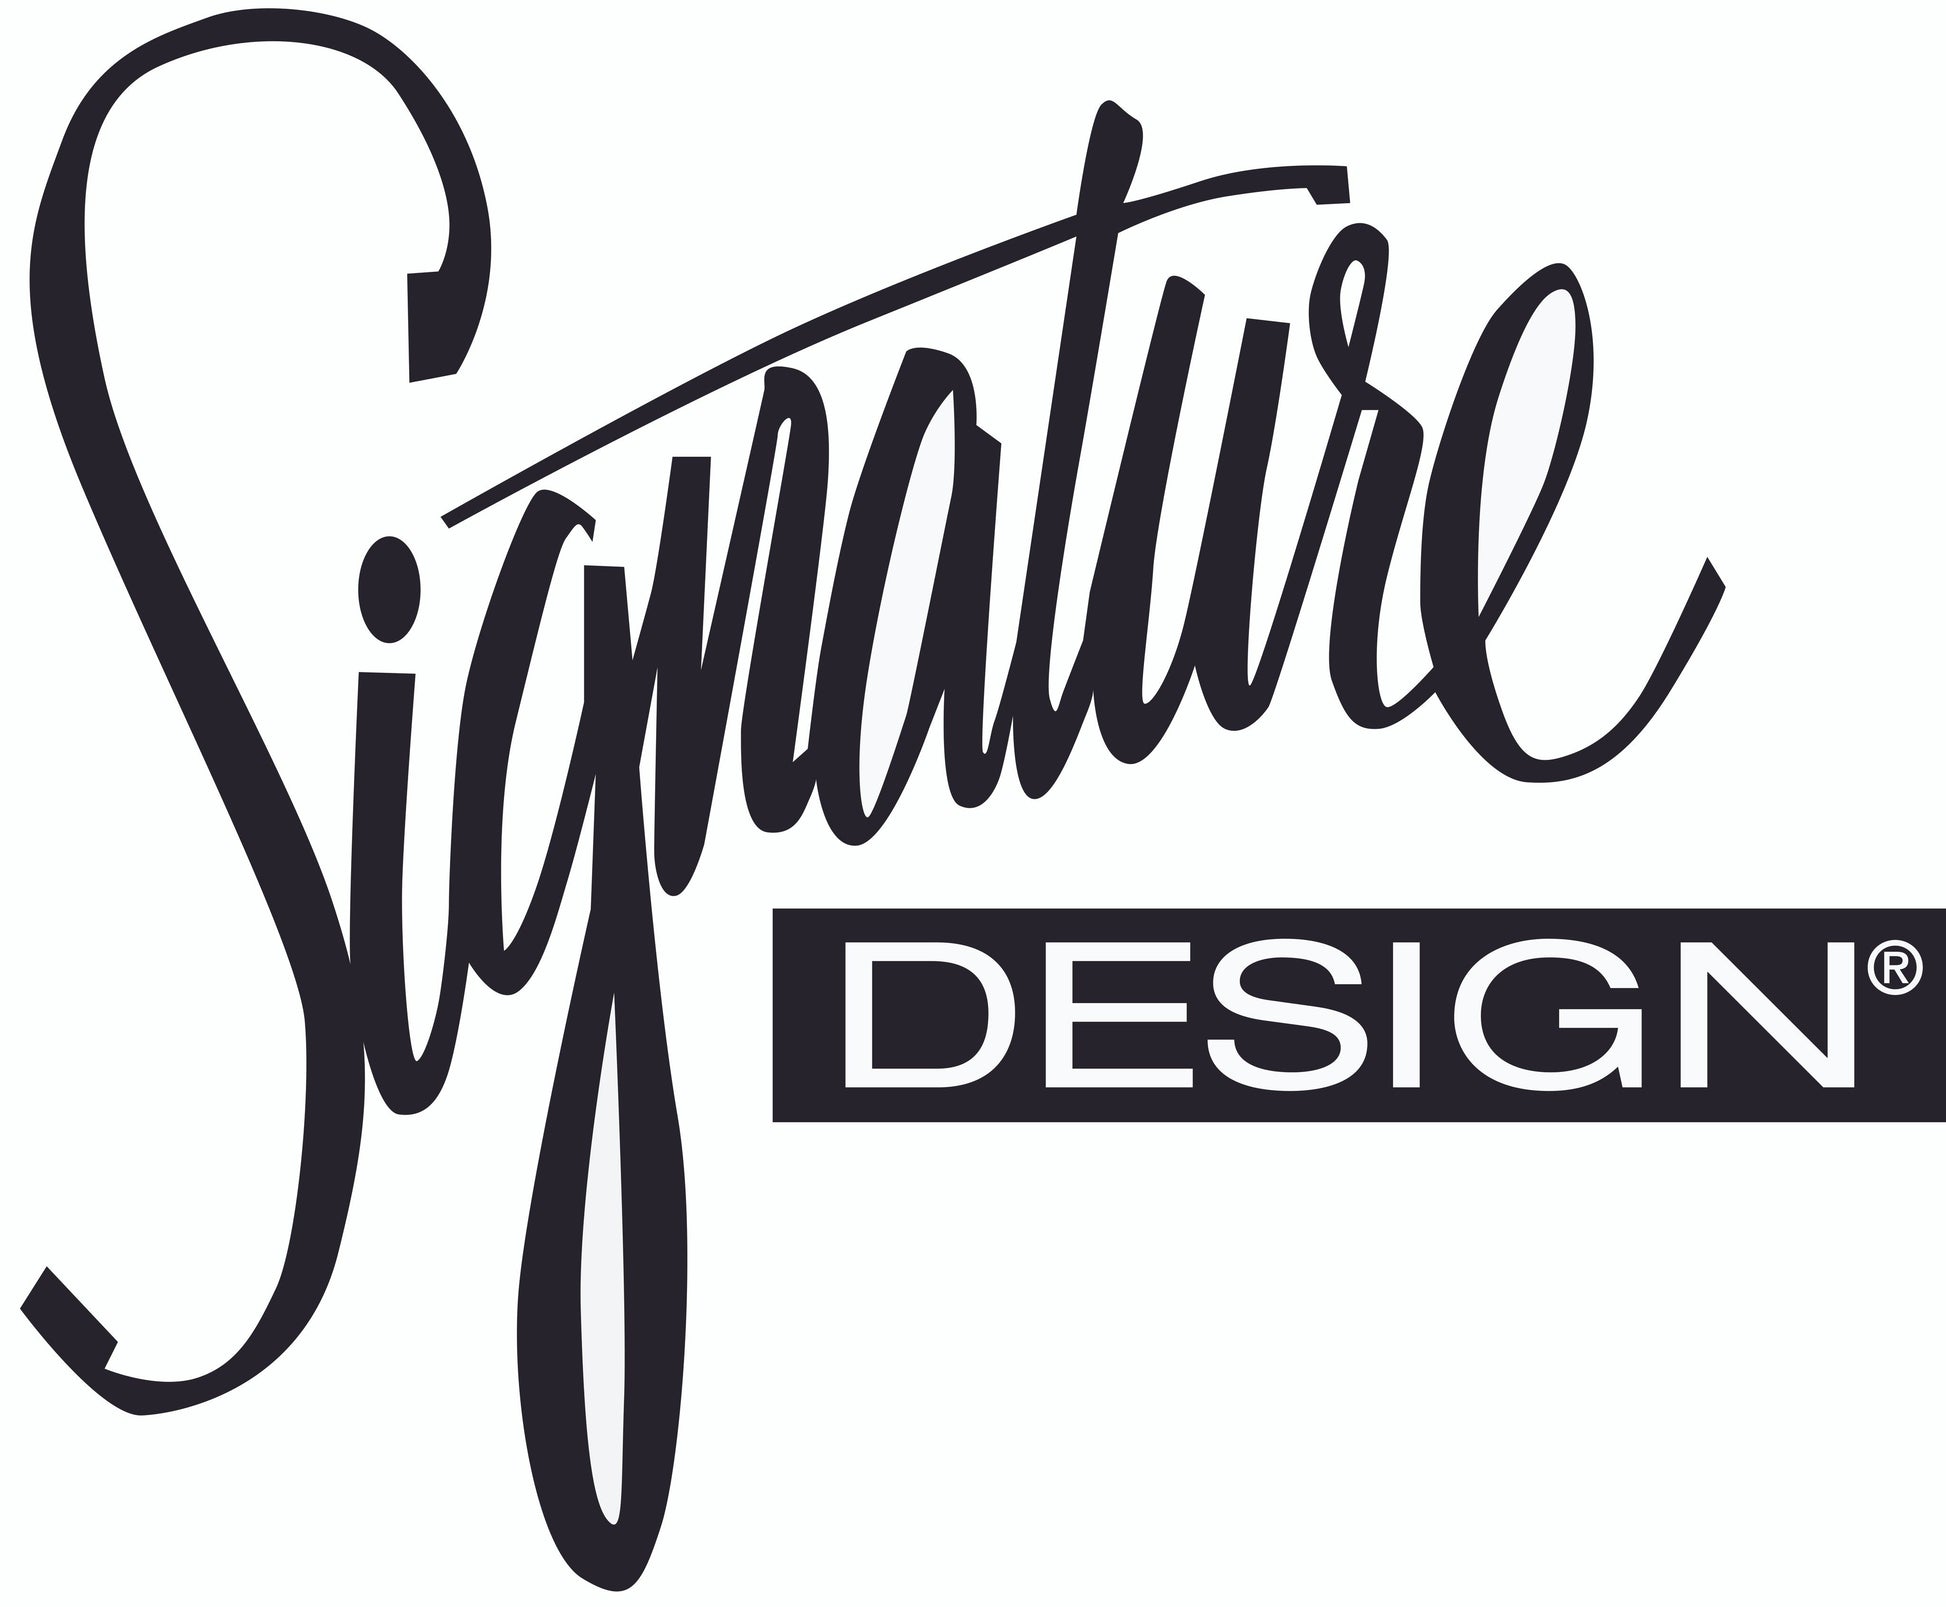 Gaelon Sofa Signature Design by Ashley®